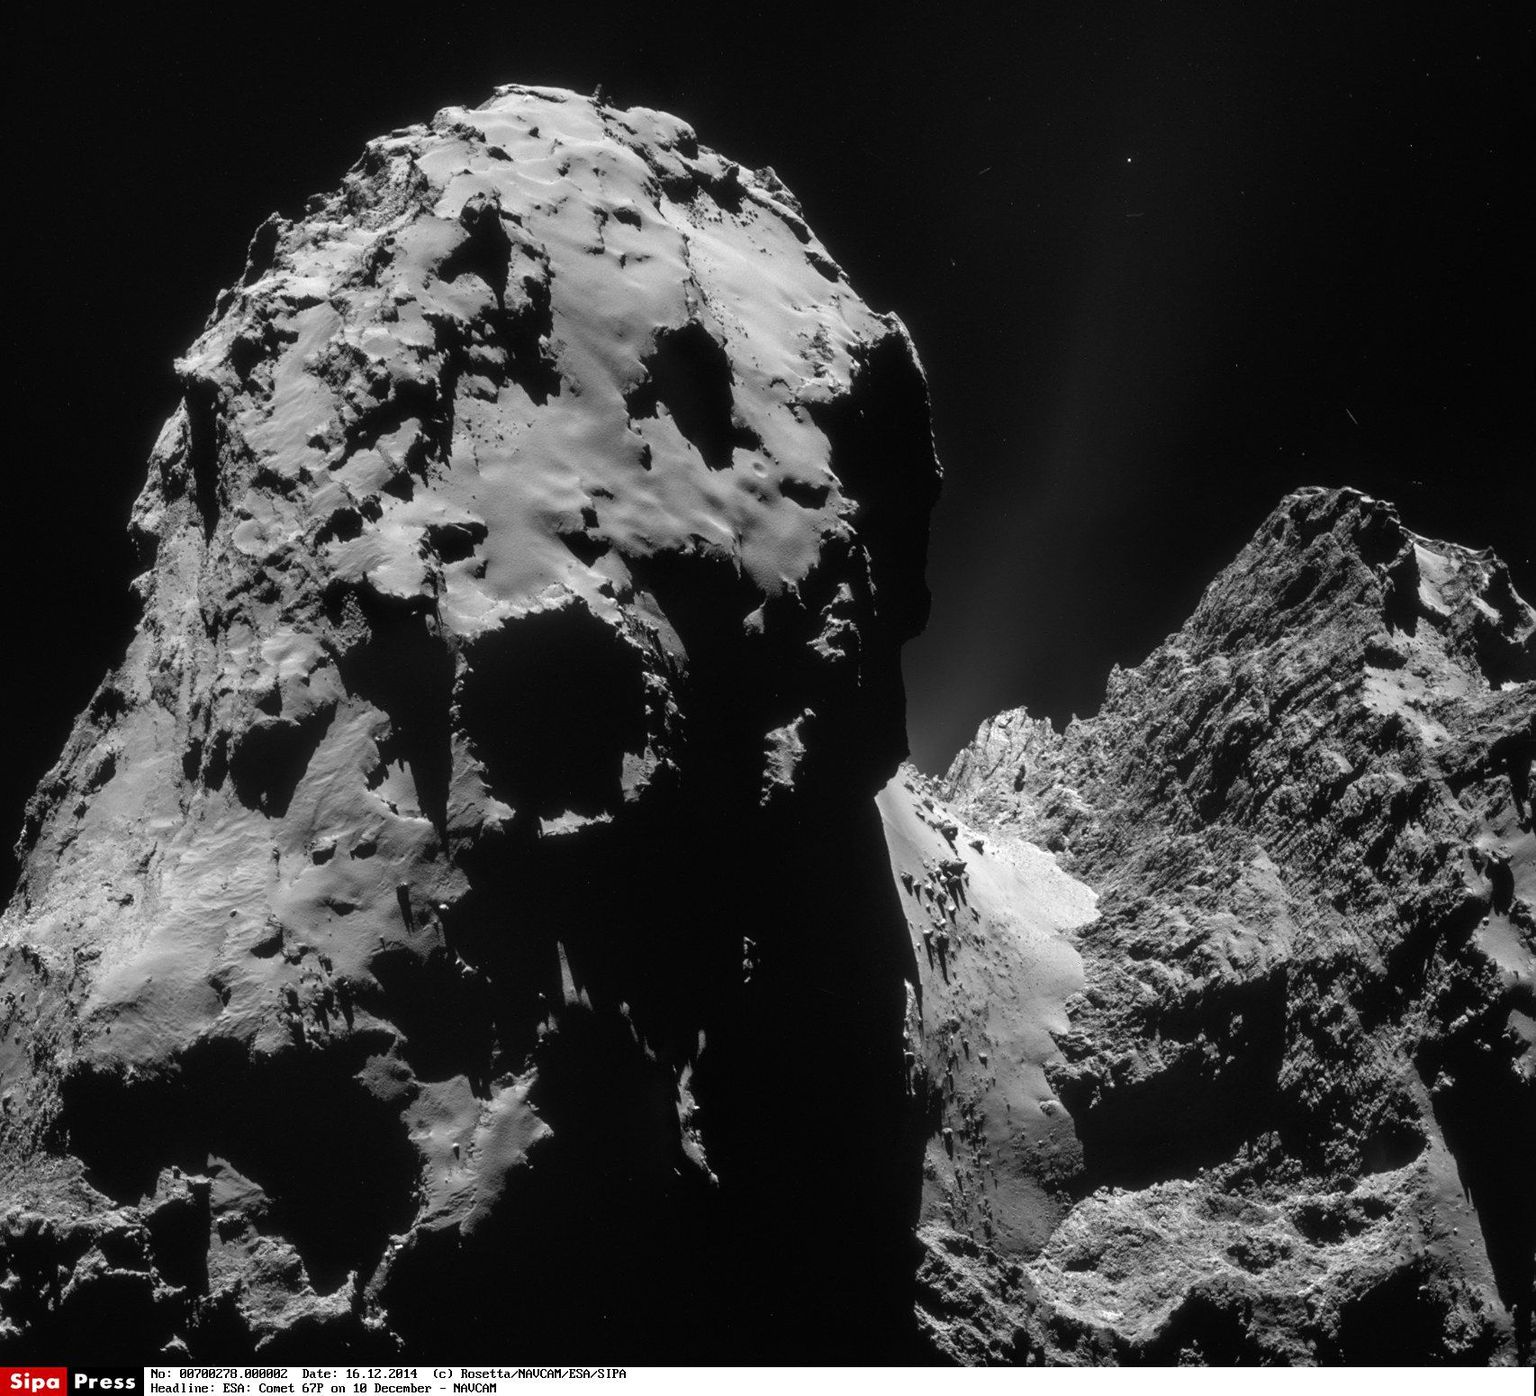 Komeet 67P/Tšurjumov-Gerassimenko